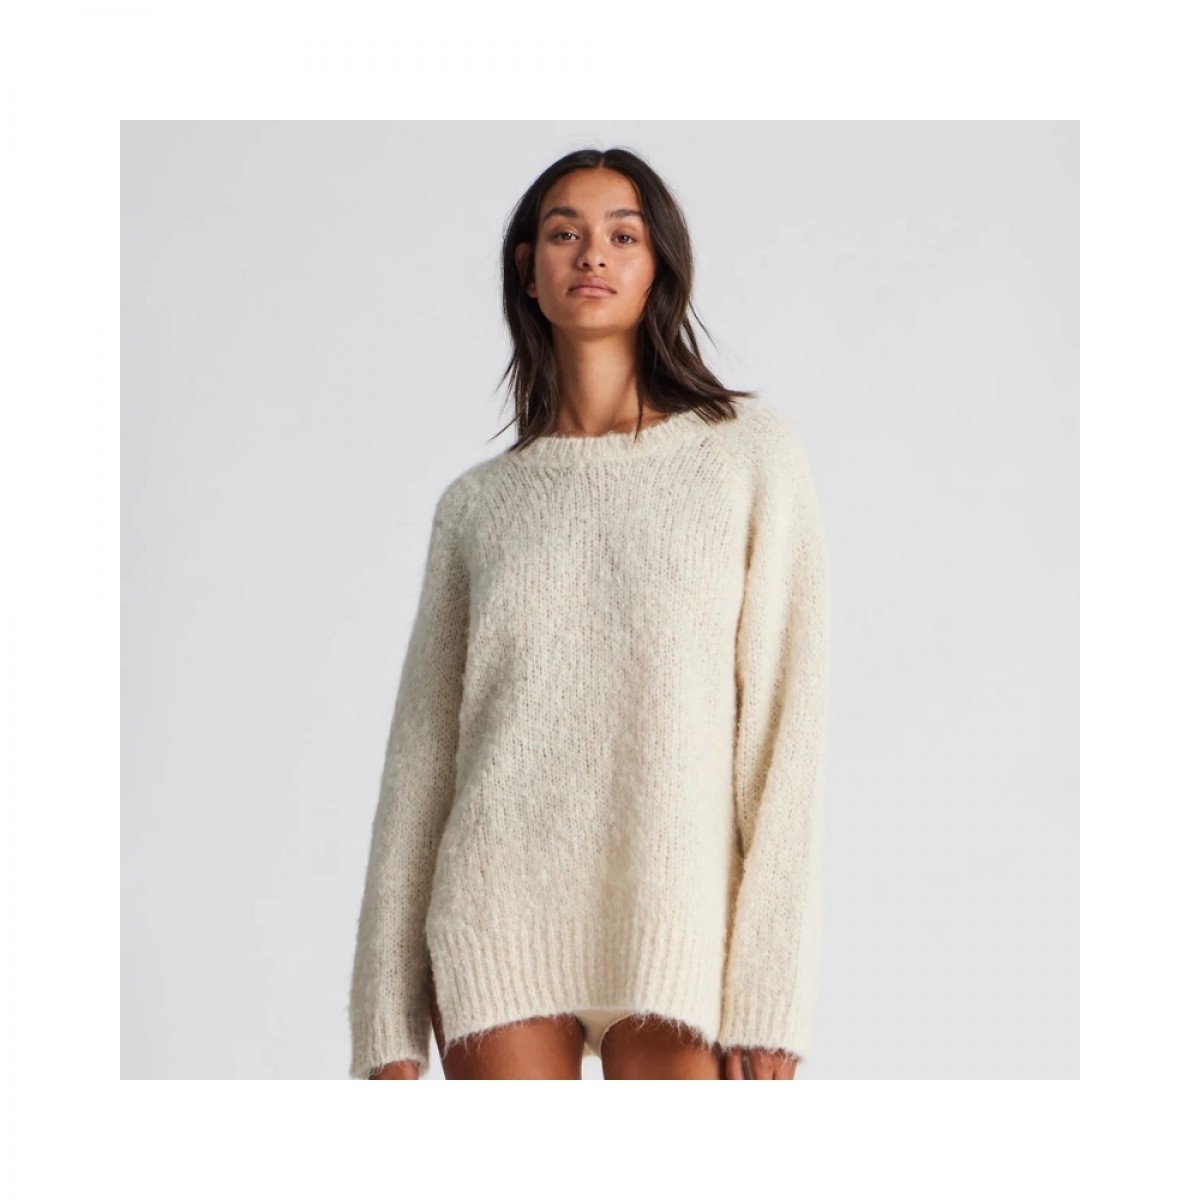 sille knit - off white - kvalitet